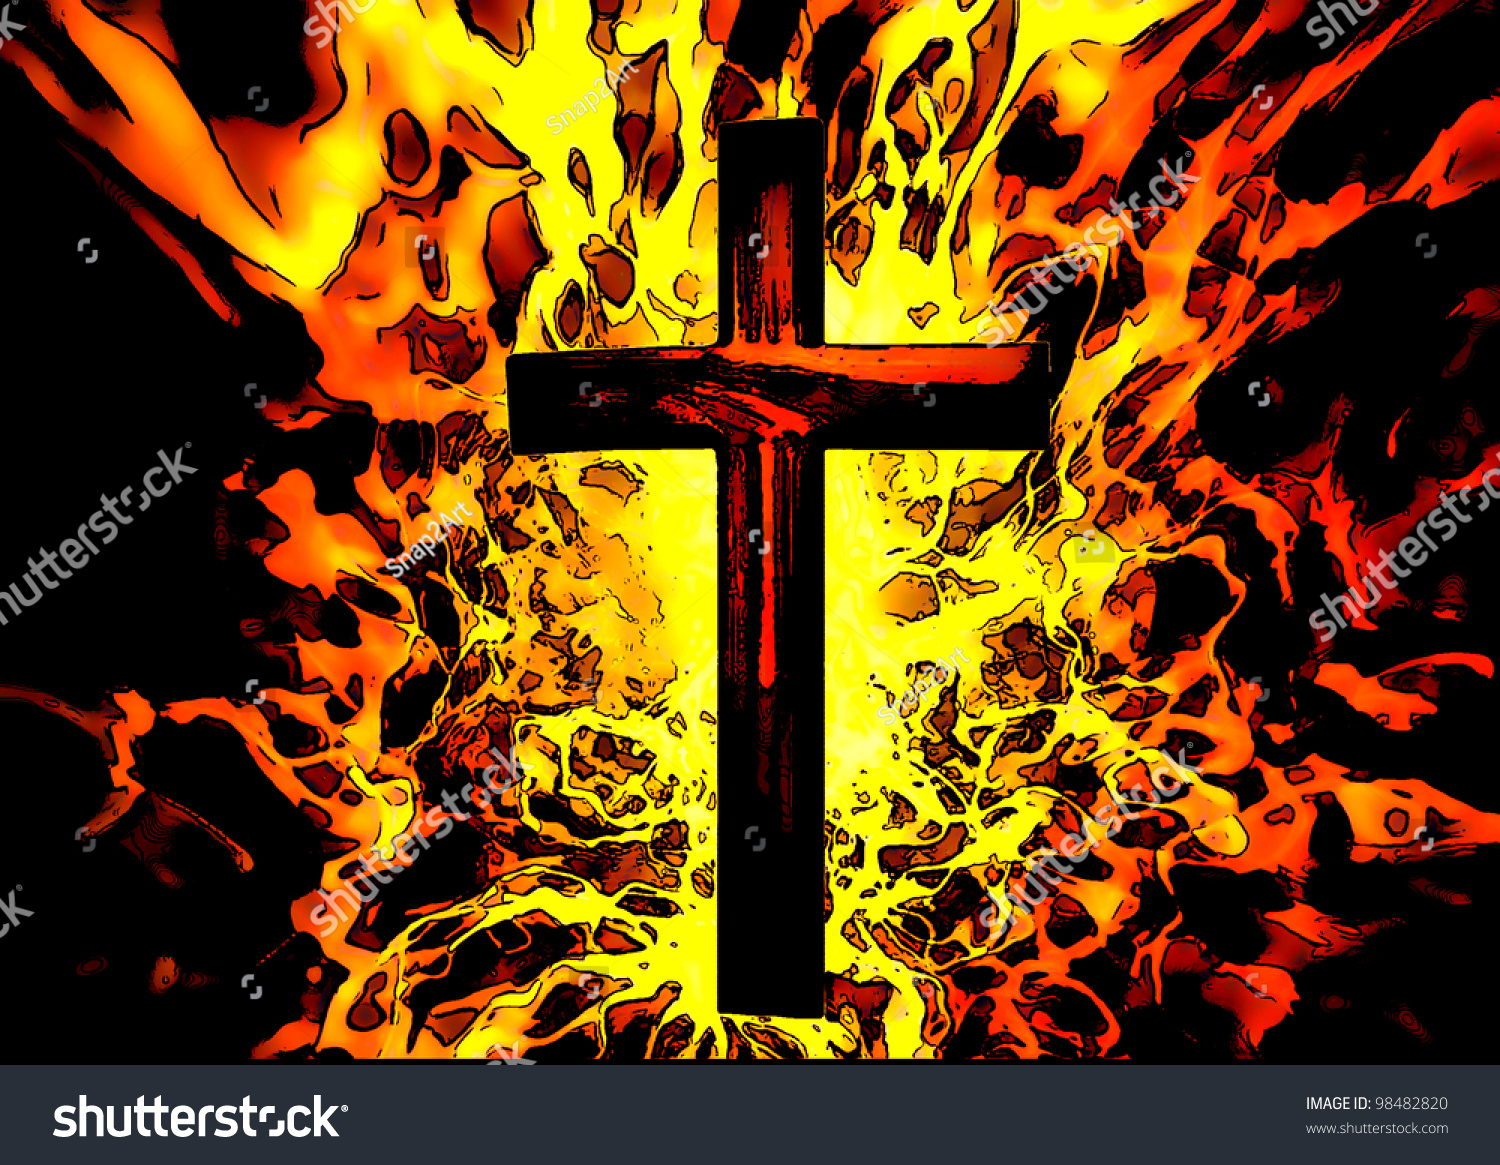 Christian Cross Flames Background Illustration Background Stock ...